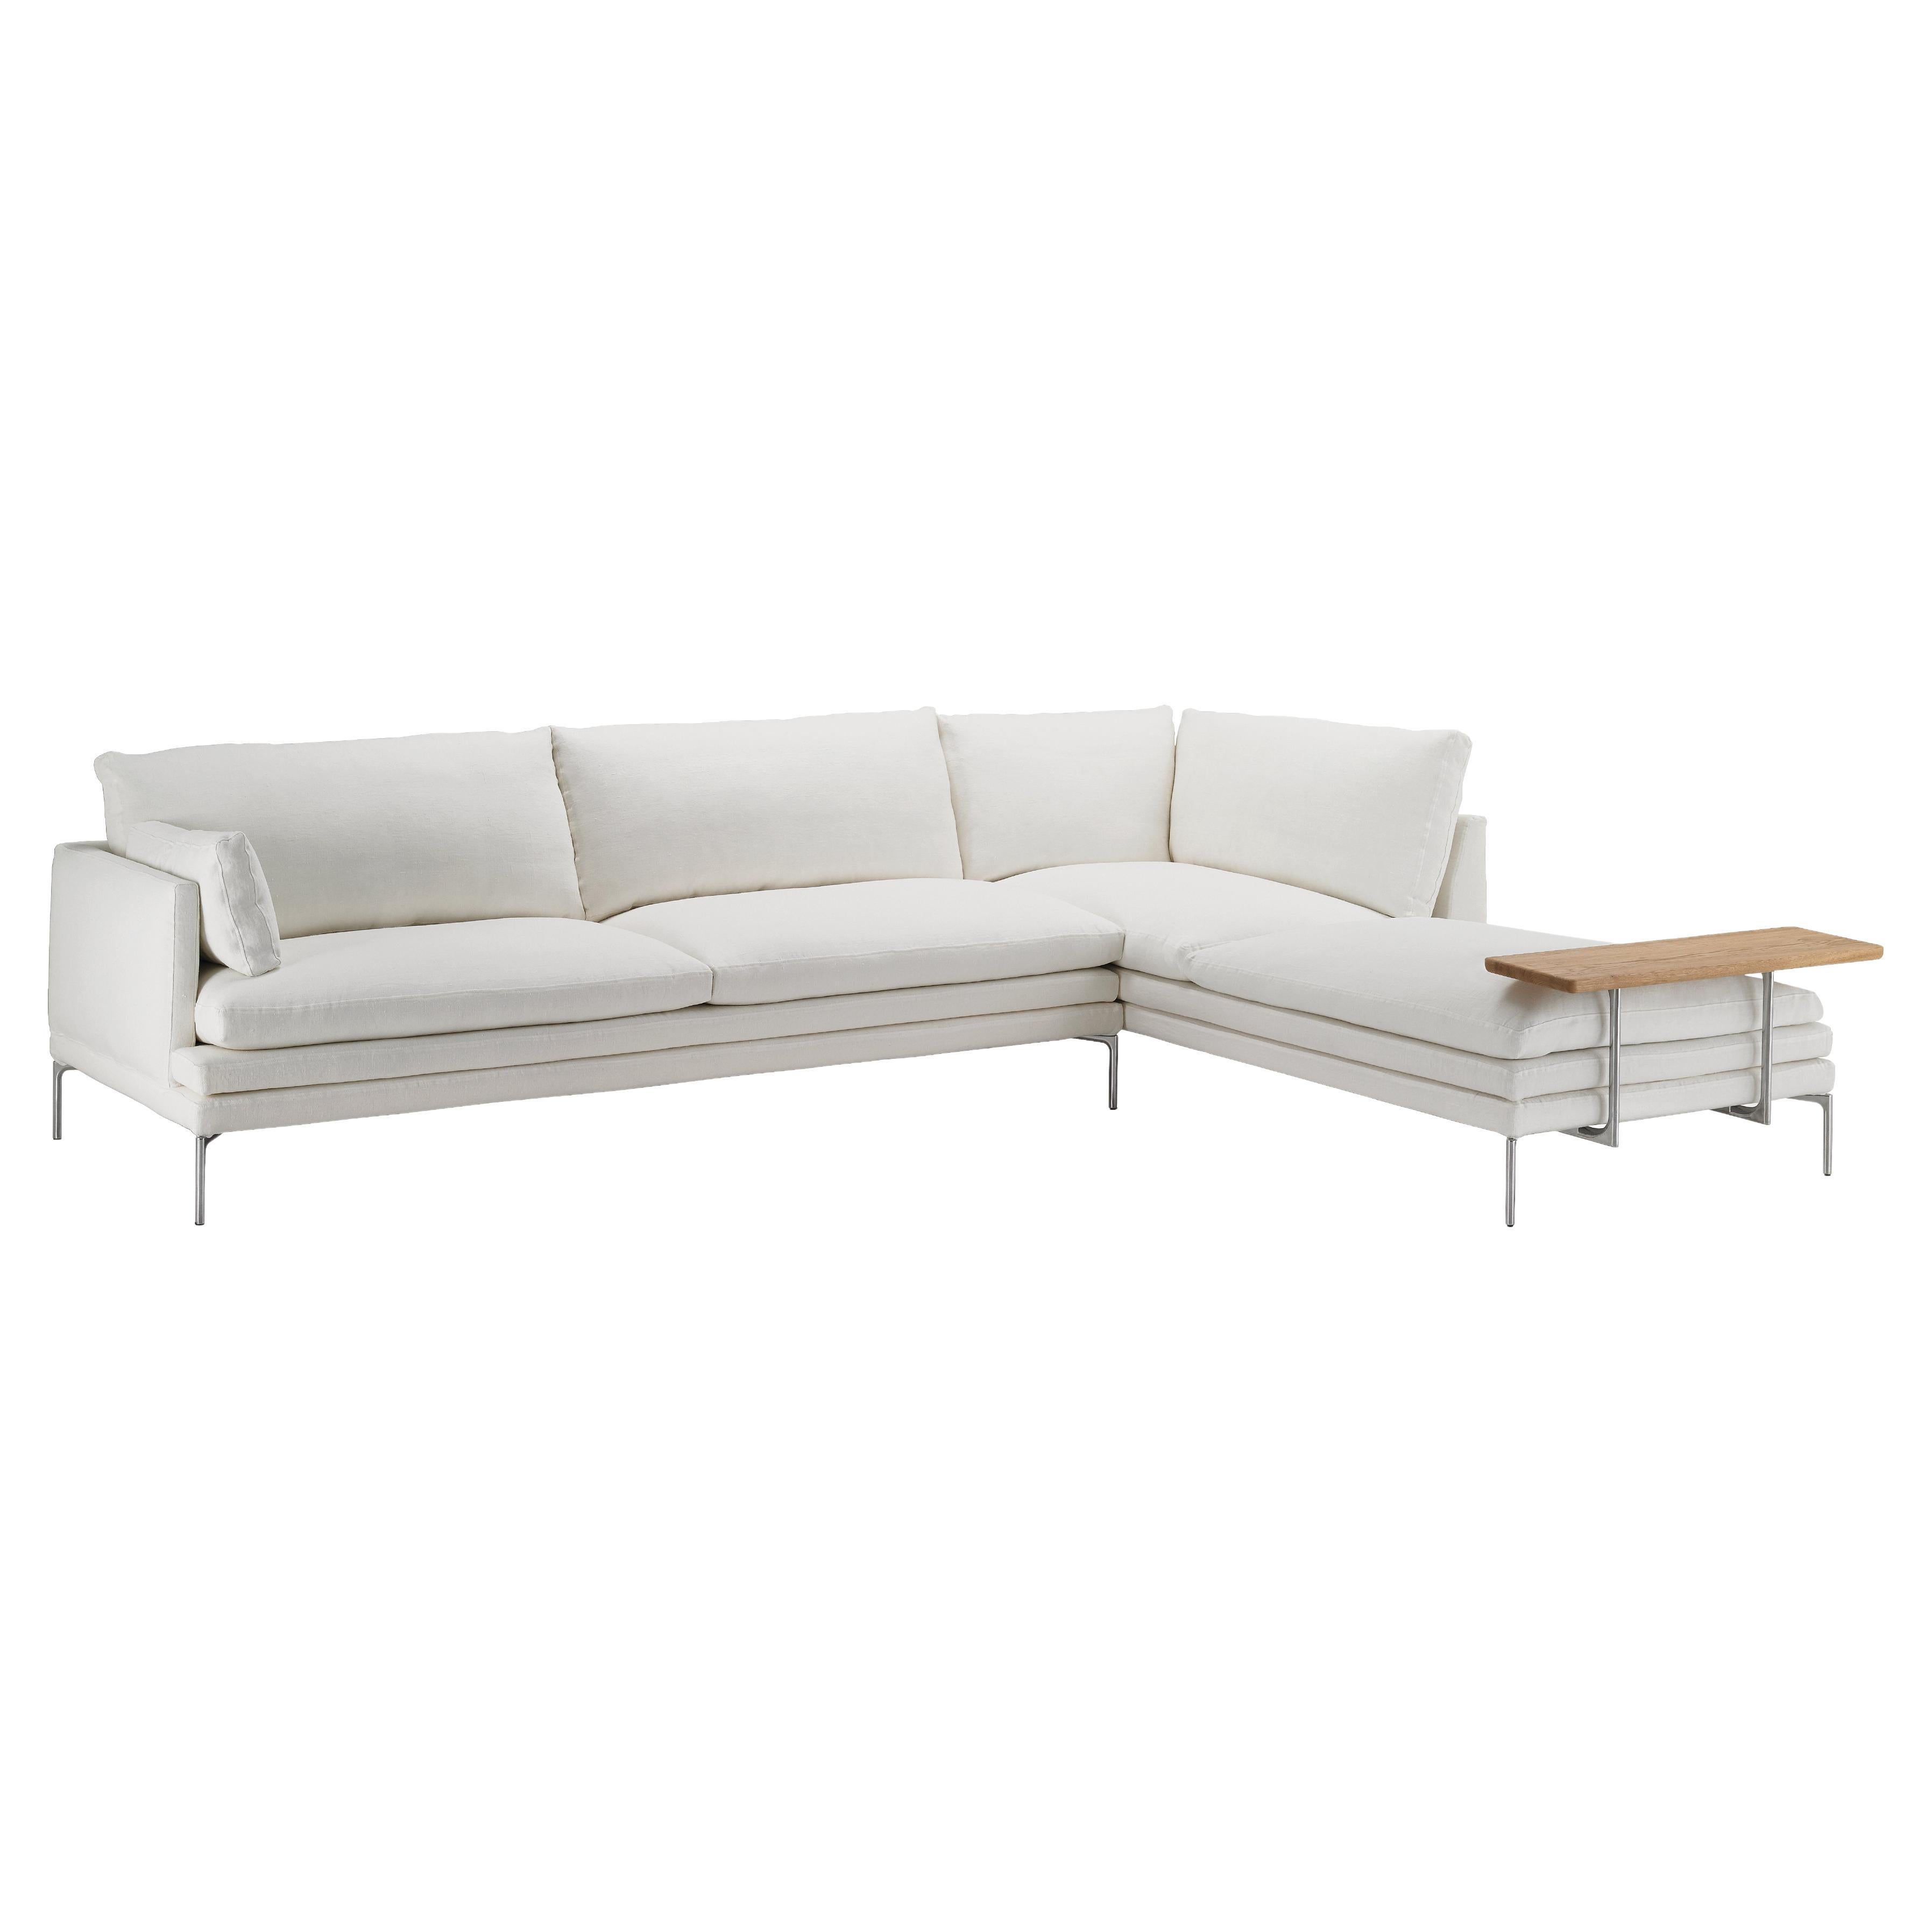 Zanotta William Modular Sofa with Shelf in White Fabric by Damian Williamson For Sale